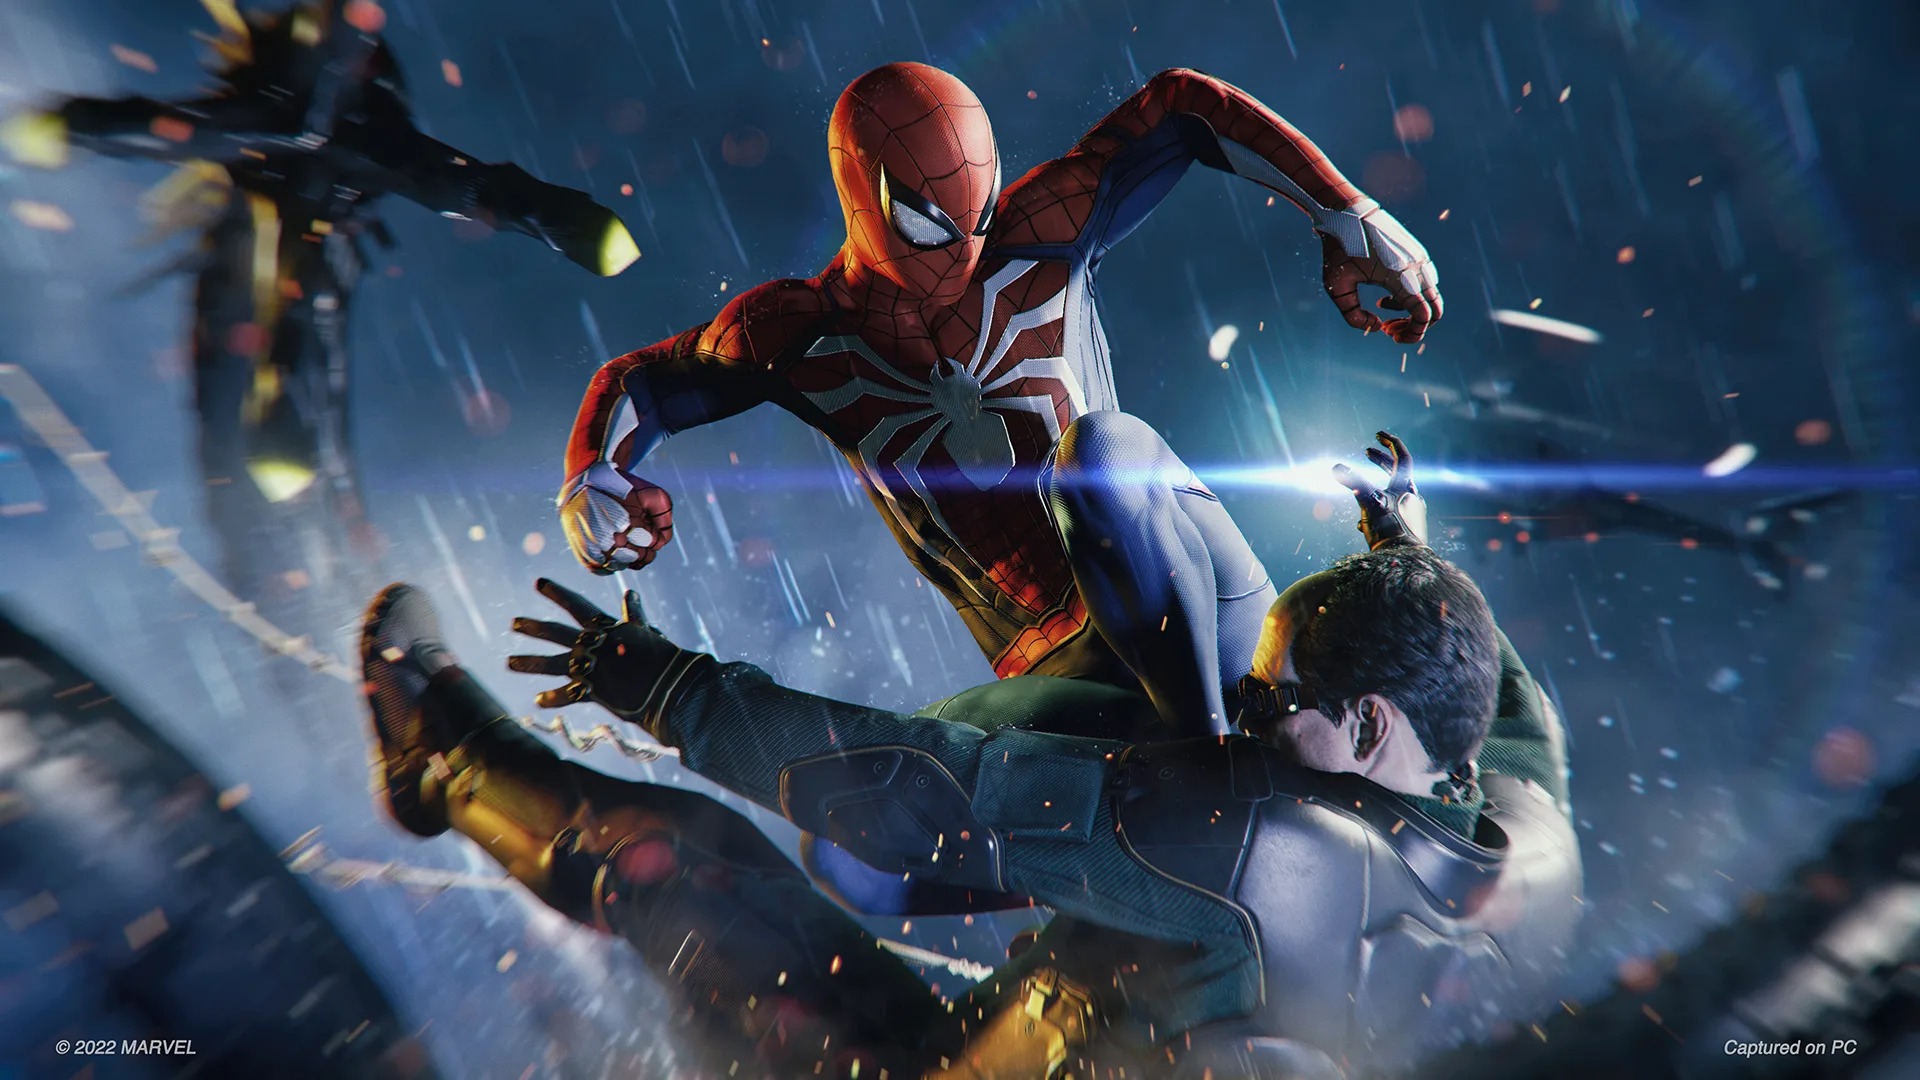 Marvel’s Spider-Man Remastered PC